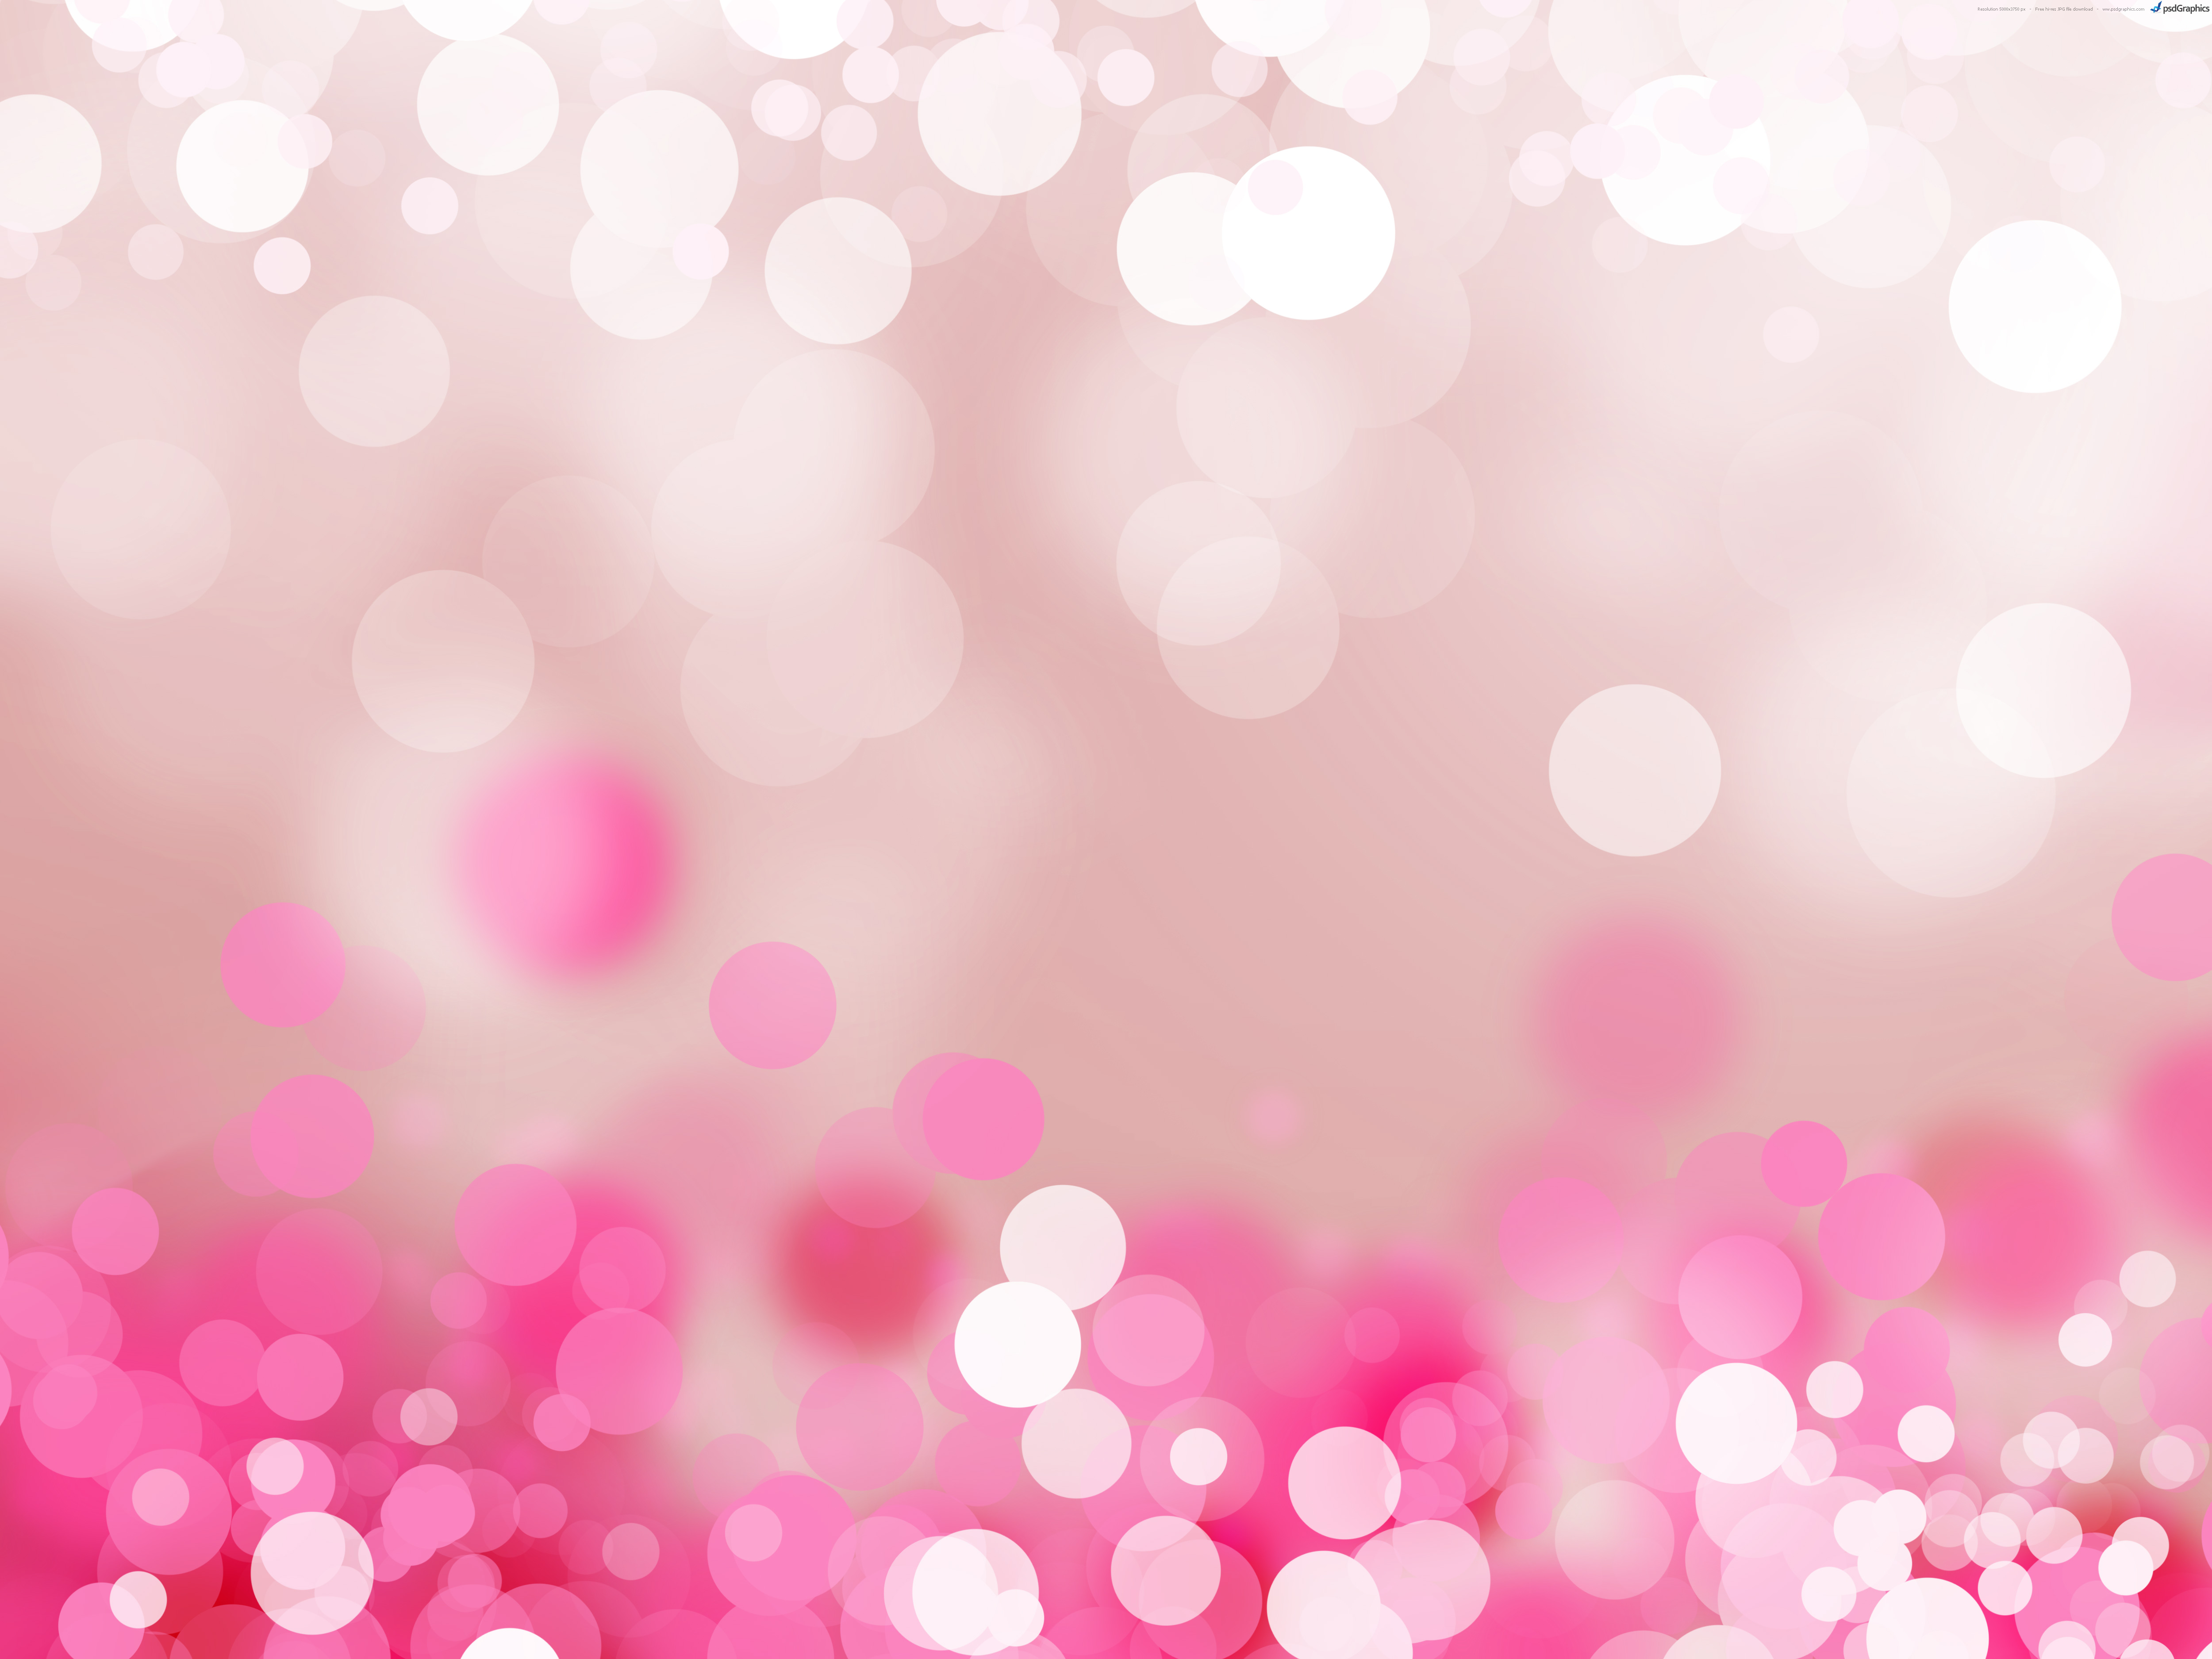 Light Pink Hd Desktop Frame Backgrounds for Powerpoint Templates - PPT  Backgrounds